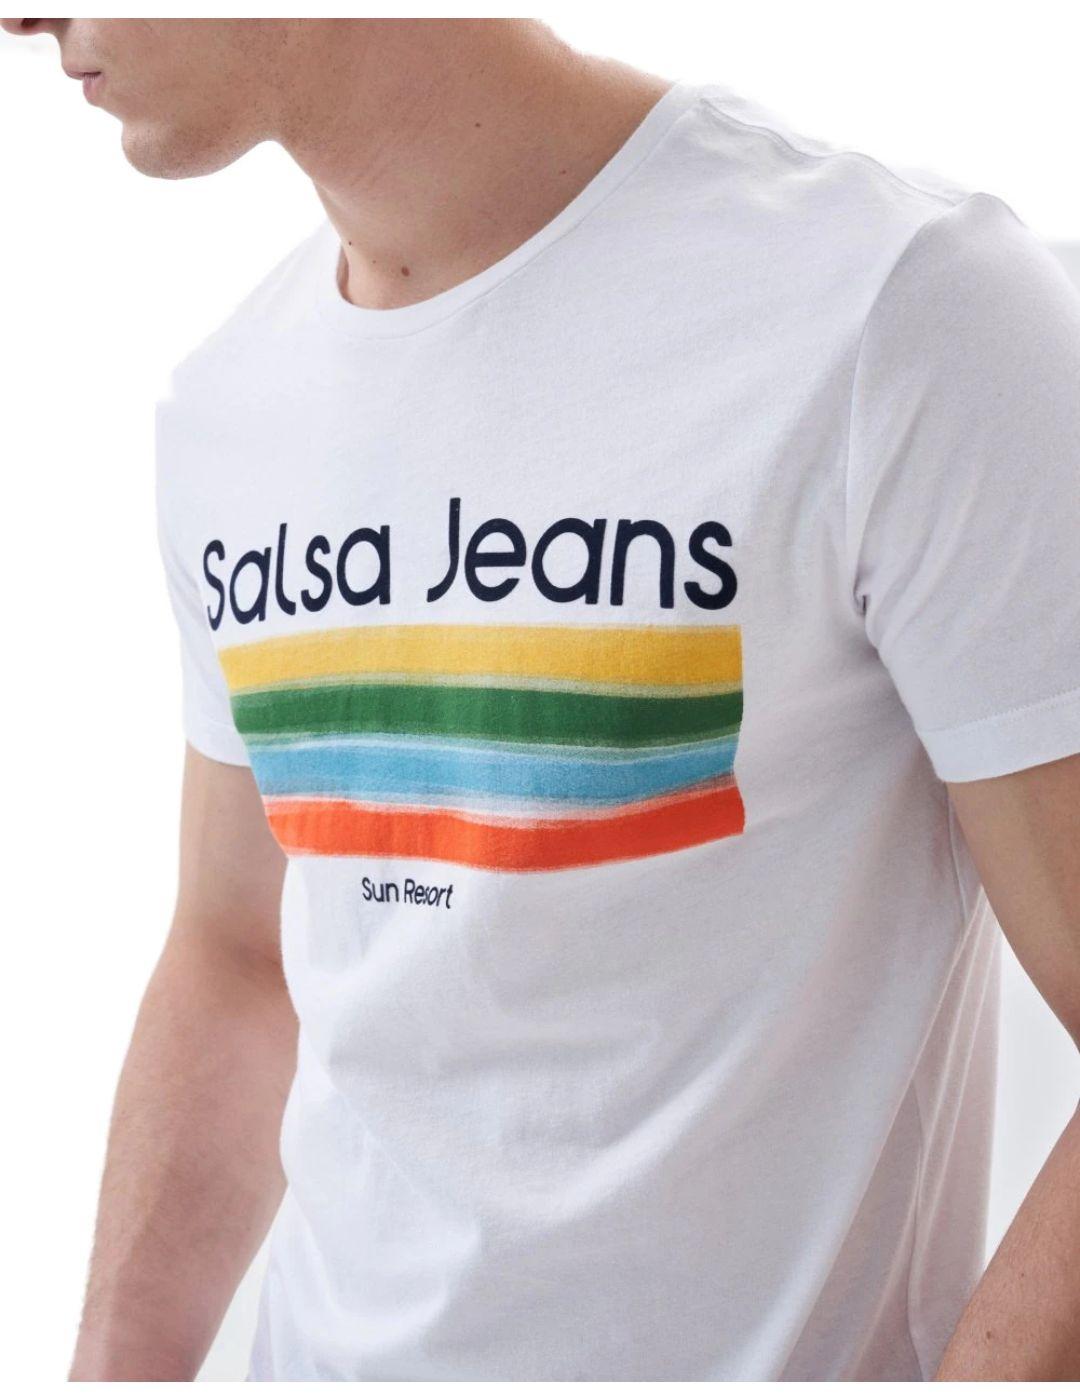 Camiseta Salsa branding blanca colores de hombre-a